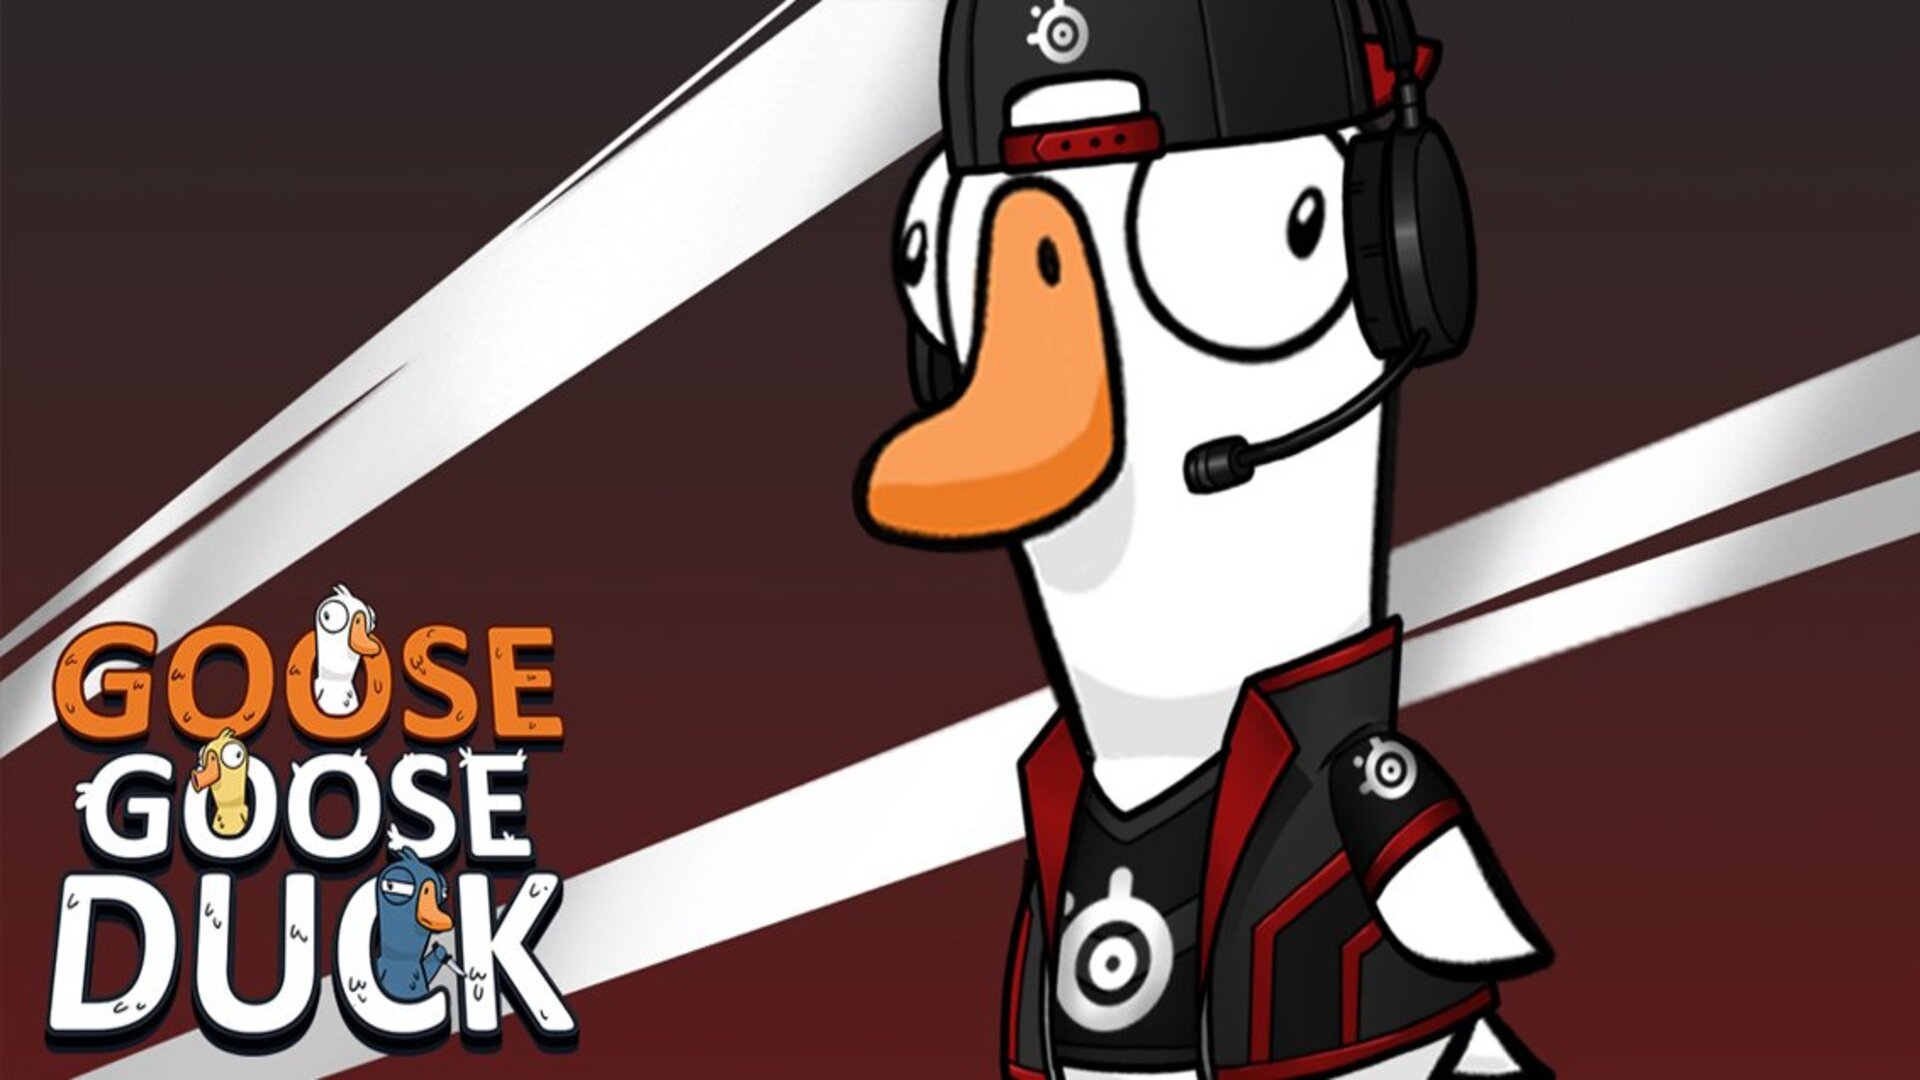 Goose Goose Duck - Steelseries Outfit Pack Digital Download CD Key, $3.79